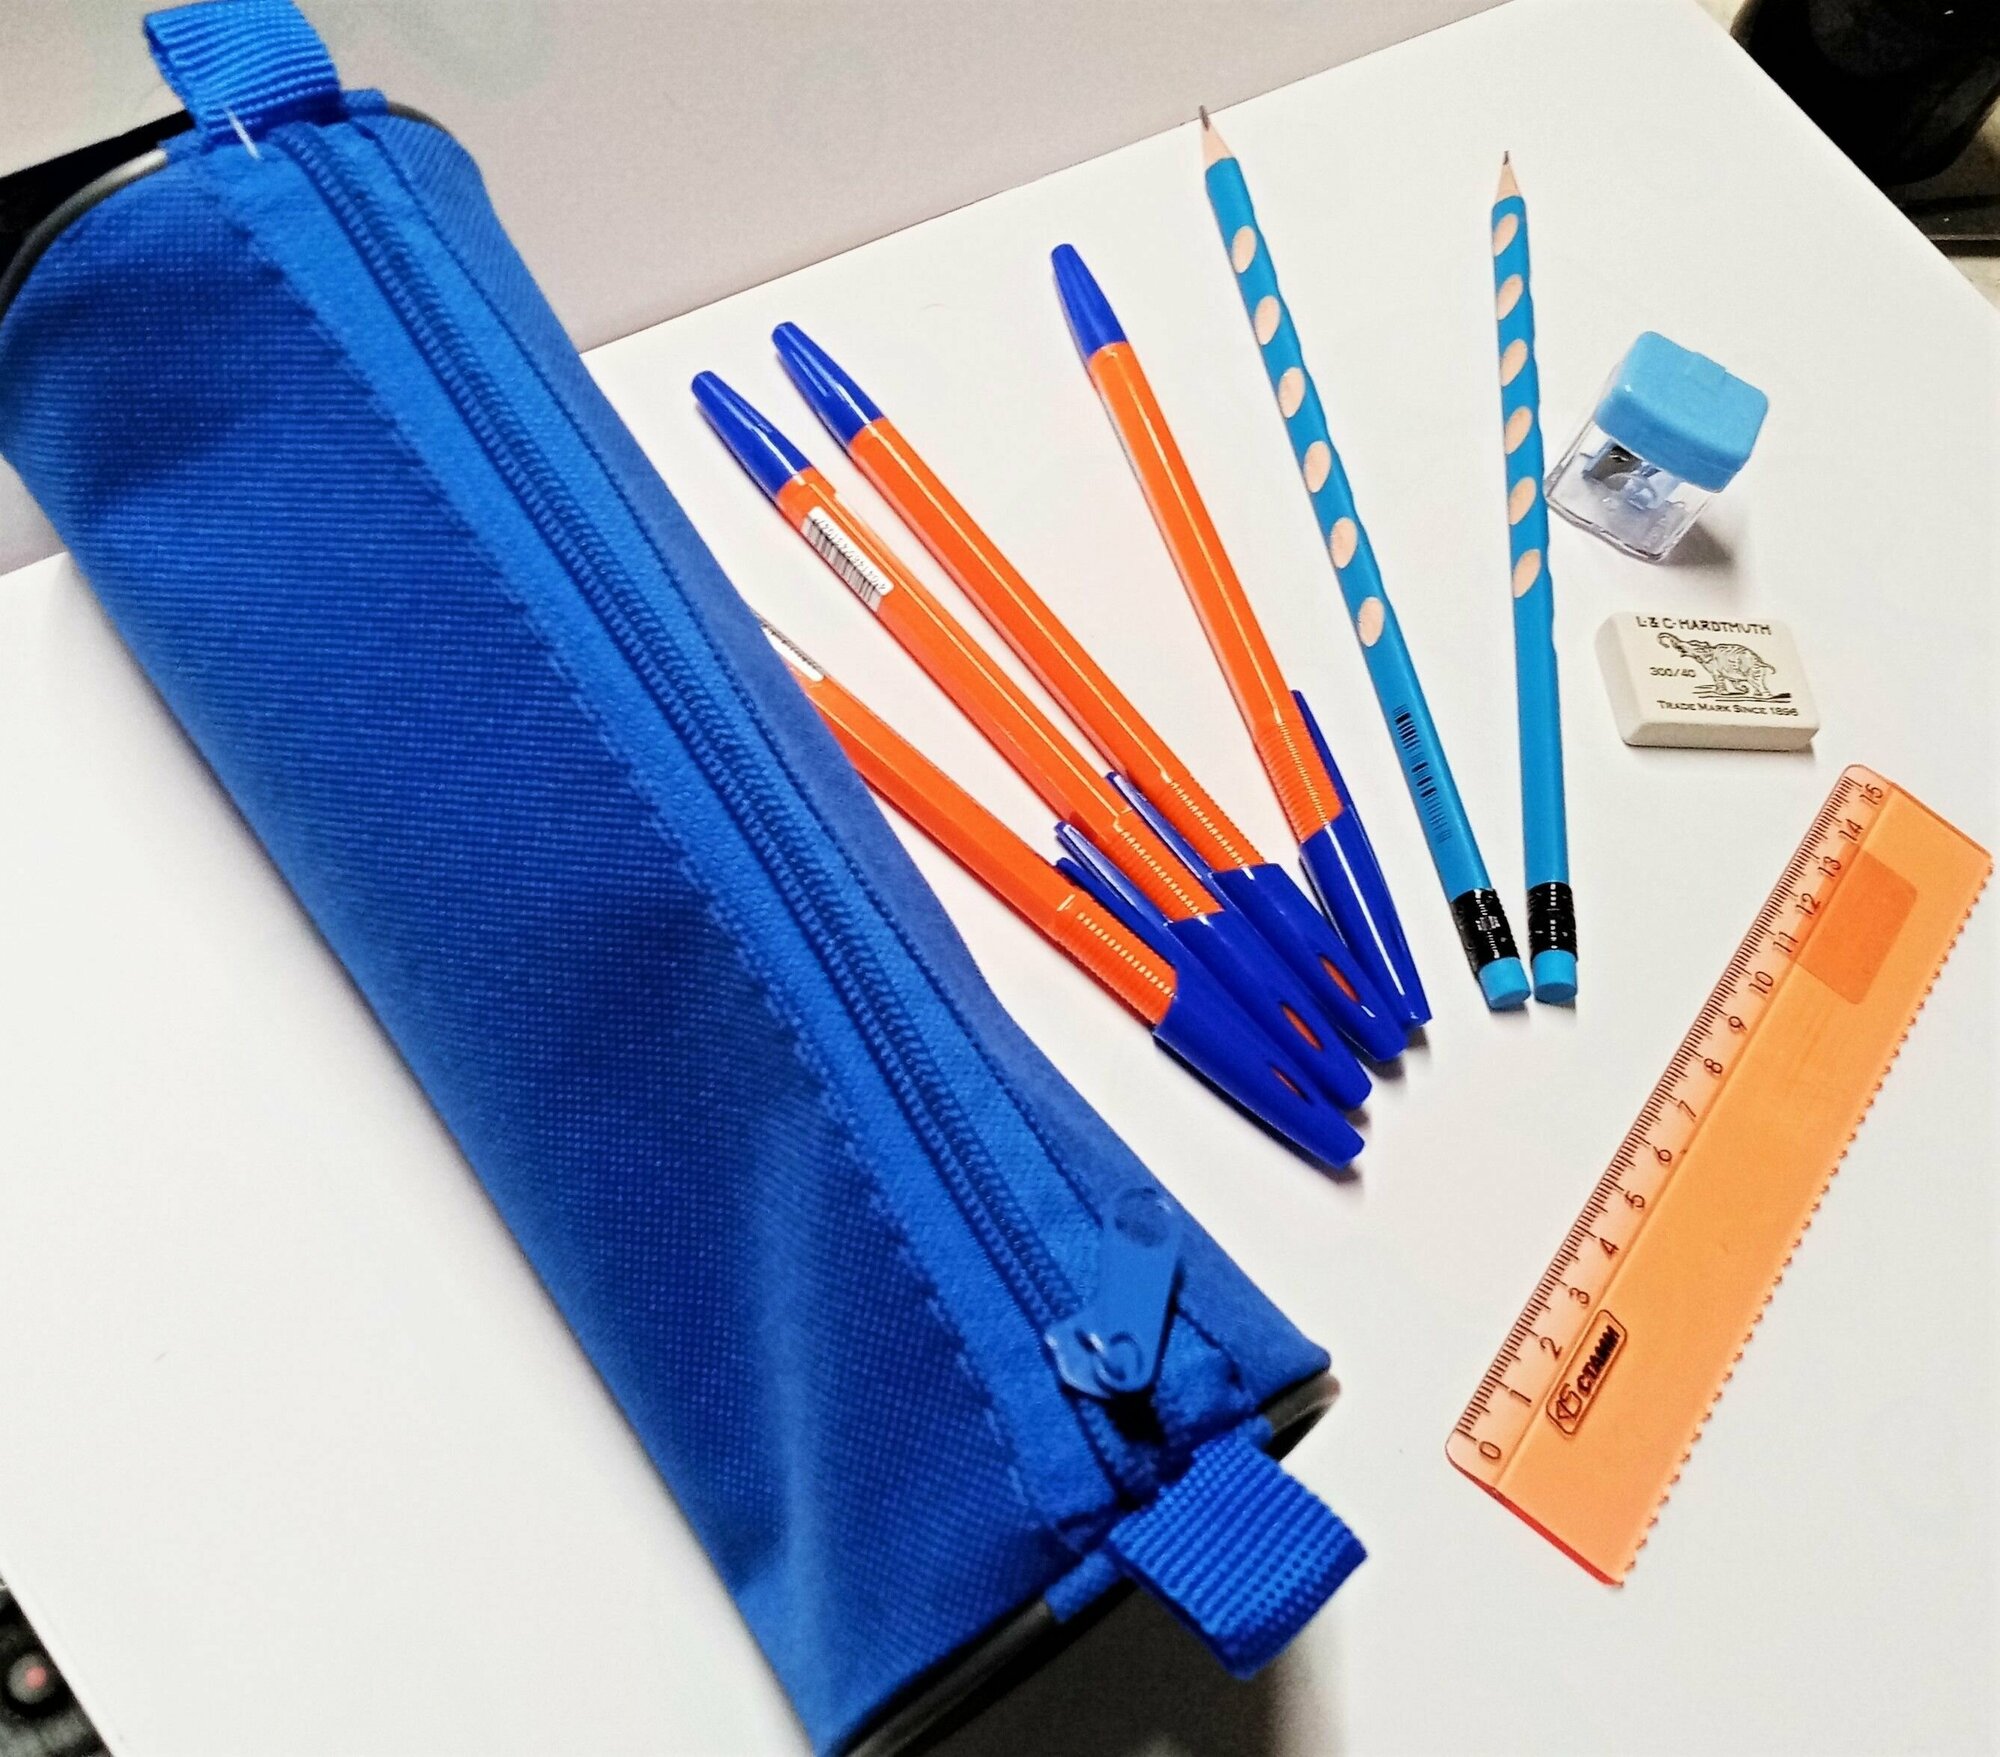 Пенал-тубус синий 70 х 210 мм с наполнением: ручка шариковая, линейка, точилка, карандаш, ластик .